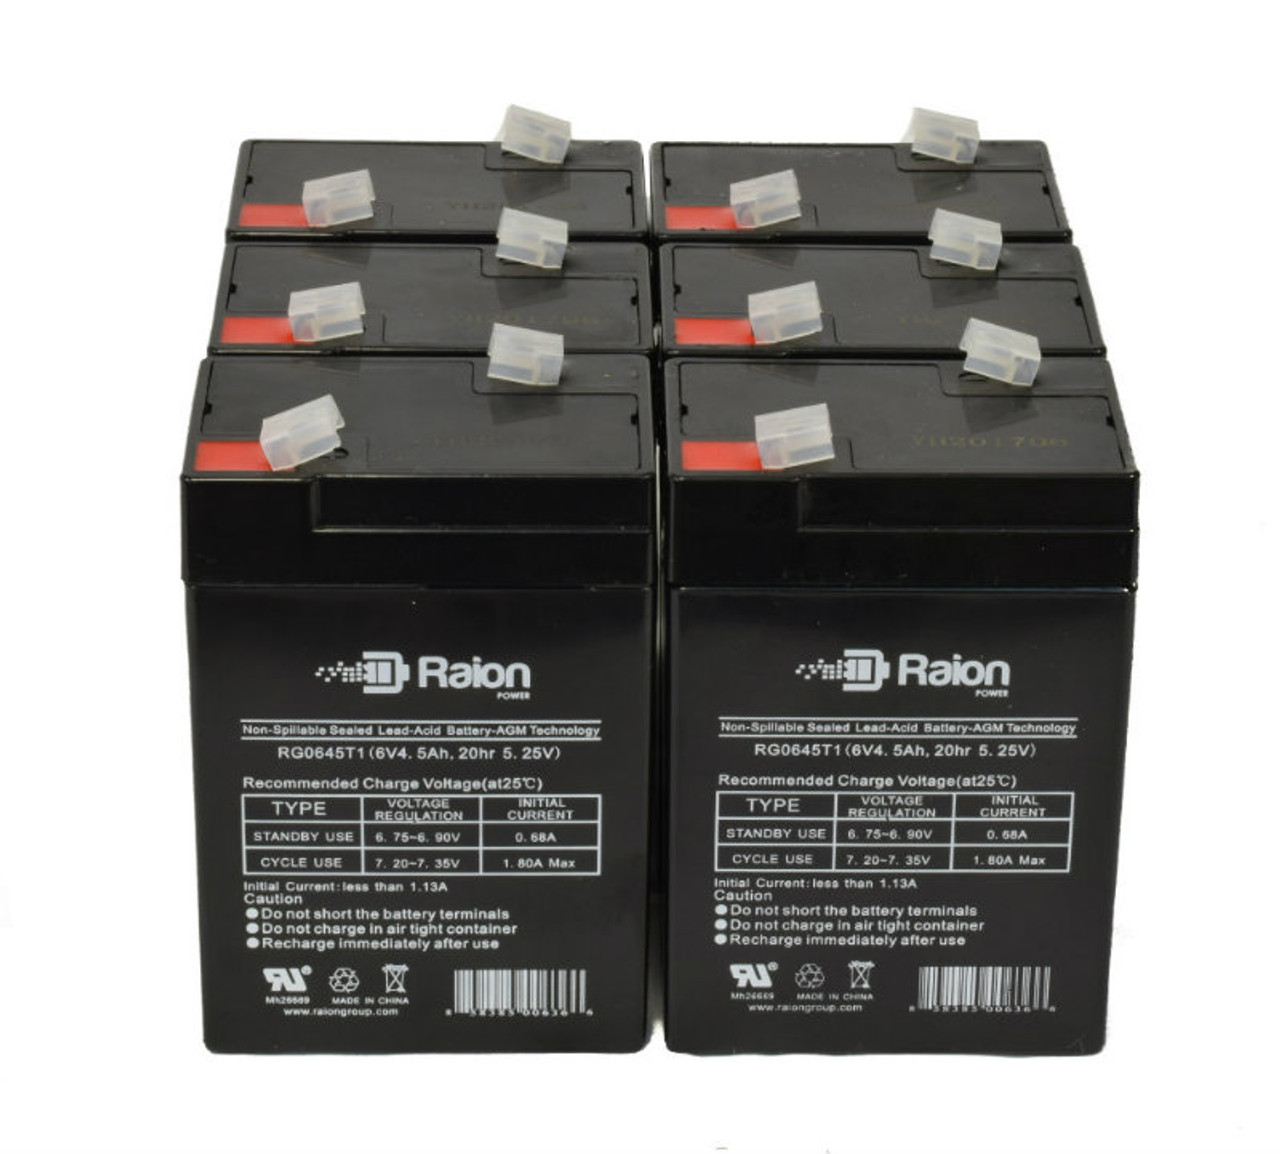 Raion Power 6 Volt 4.5Ah RG0645T1 Replacement Battery for FirstPower FP640A - 6 Pack